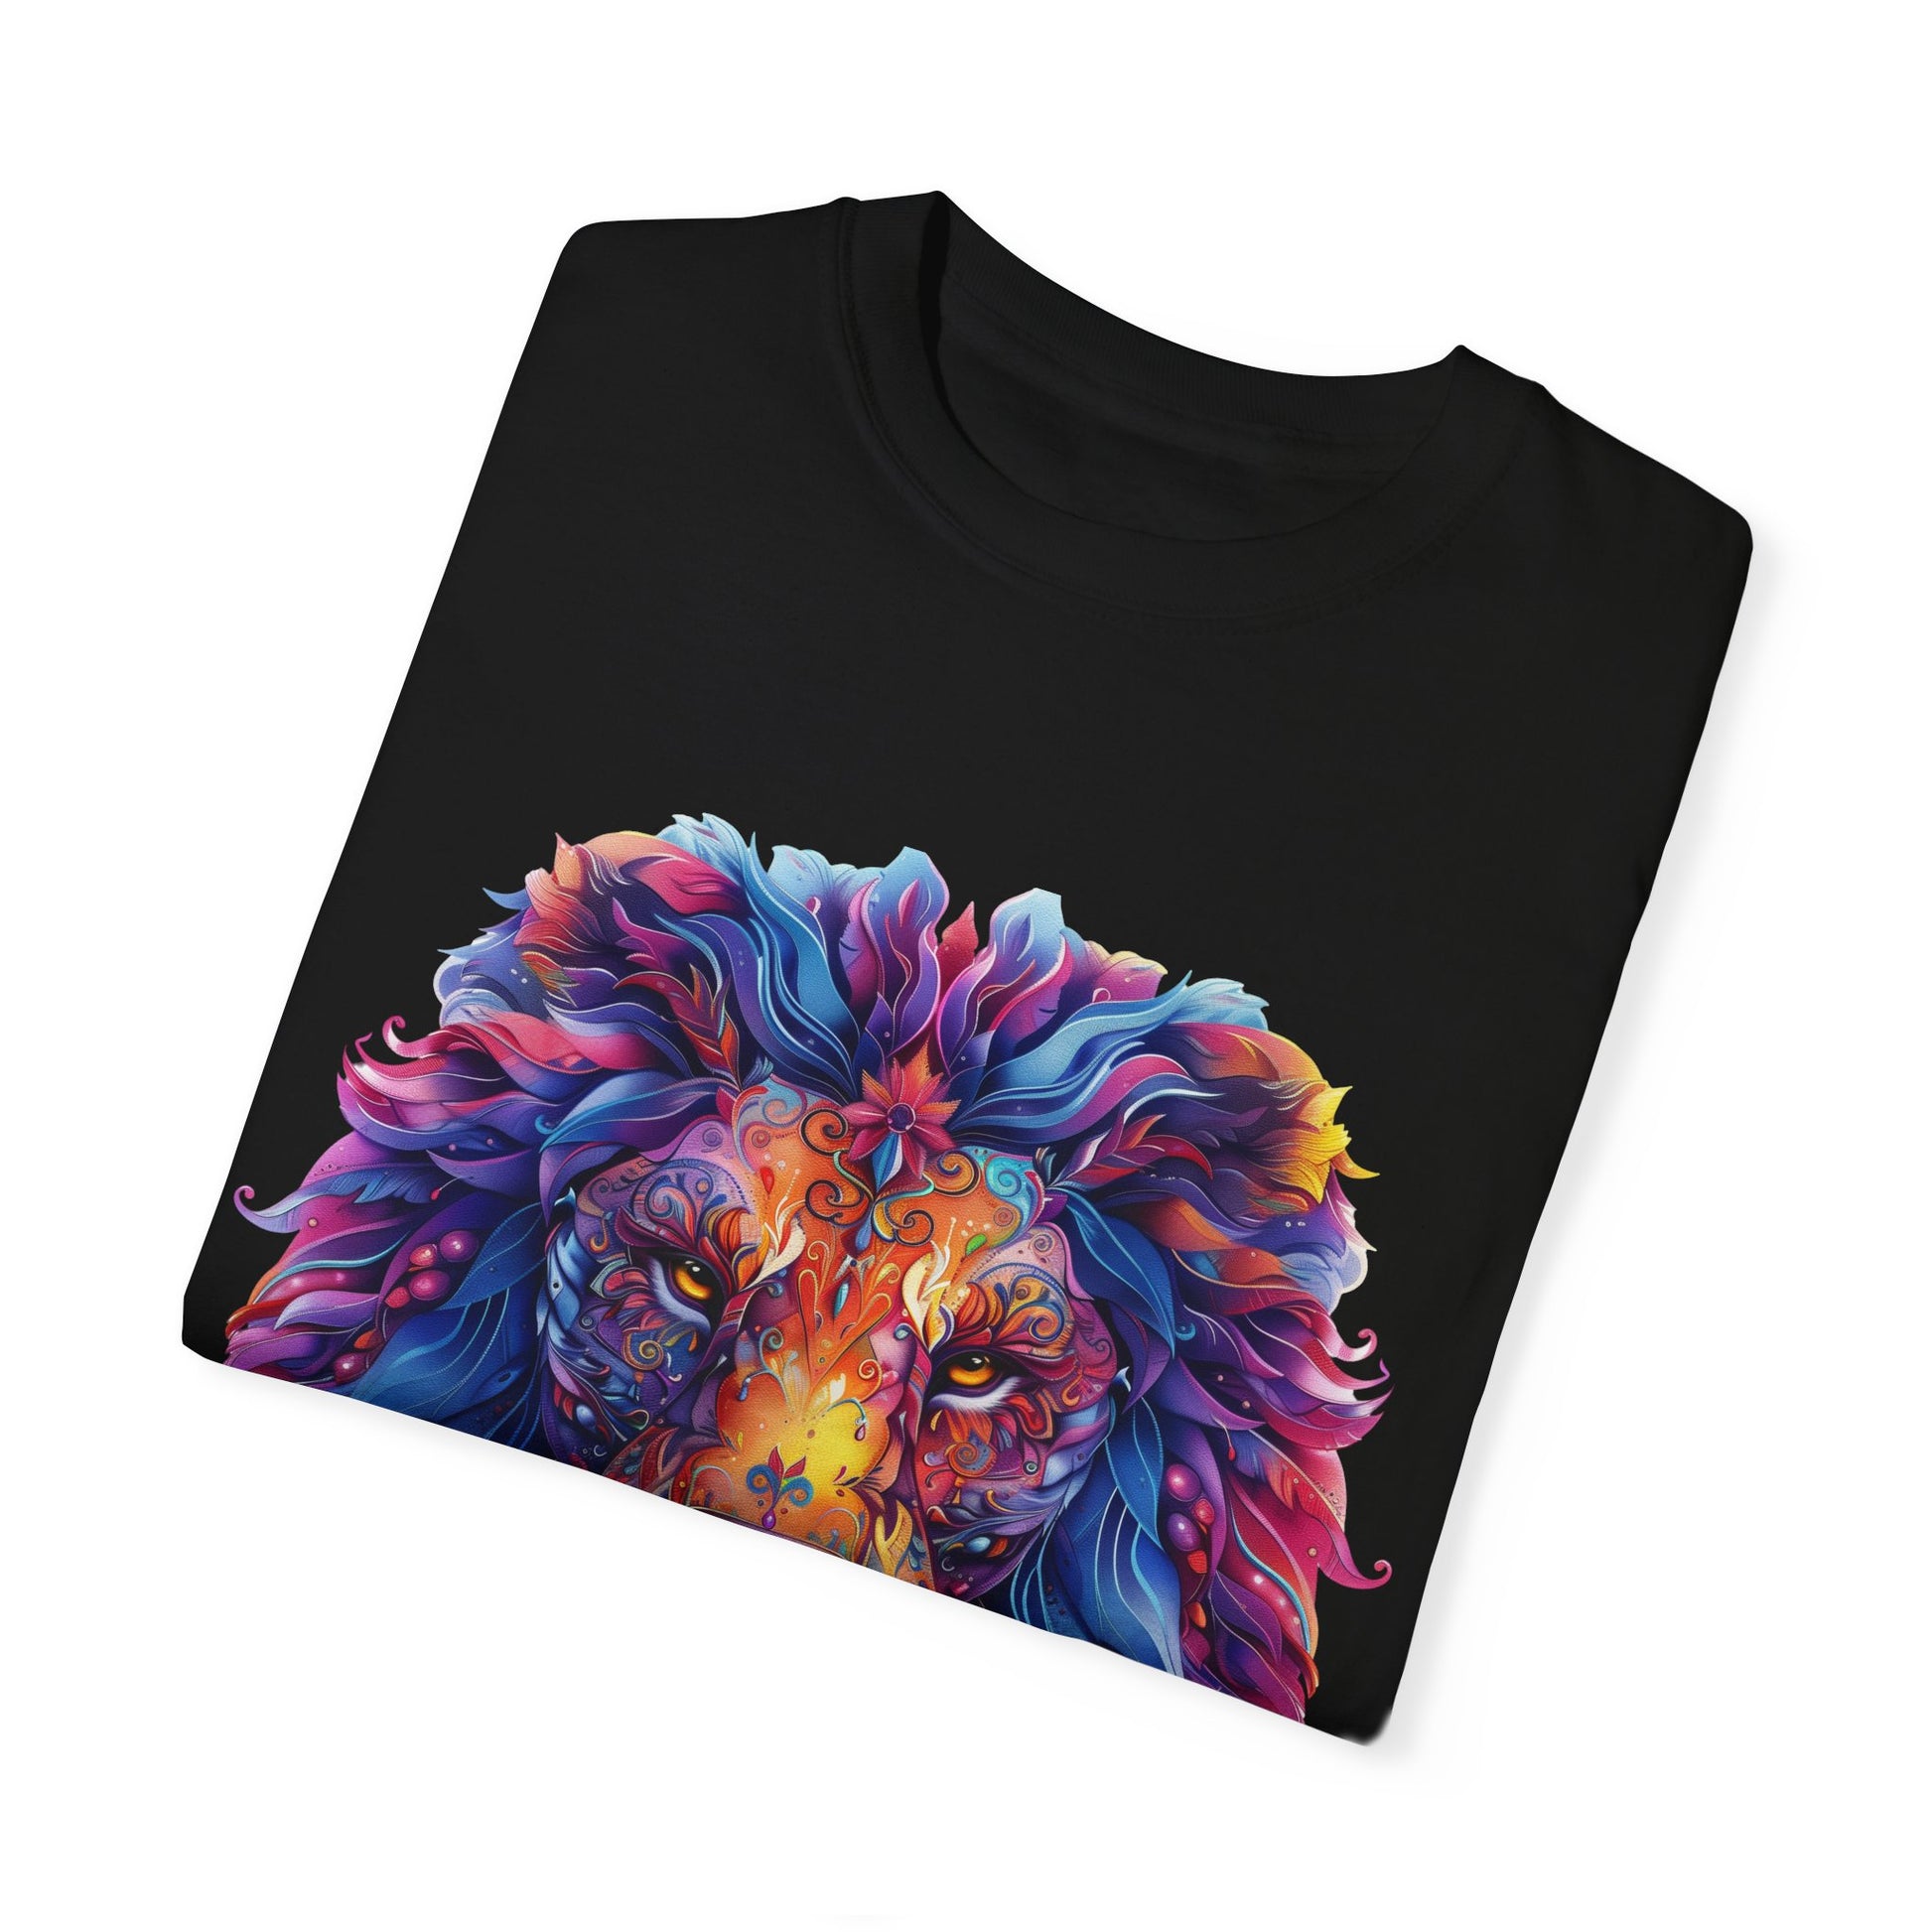 Lion Head Cool Graphic Design Novelty Unisex Garment-dyed T-shirt Cotton Funny Humorous Graphic Soft Premium Unisex Men Women Black T-shirt Birthday Gift-17